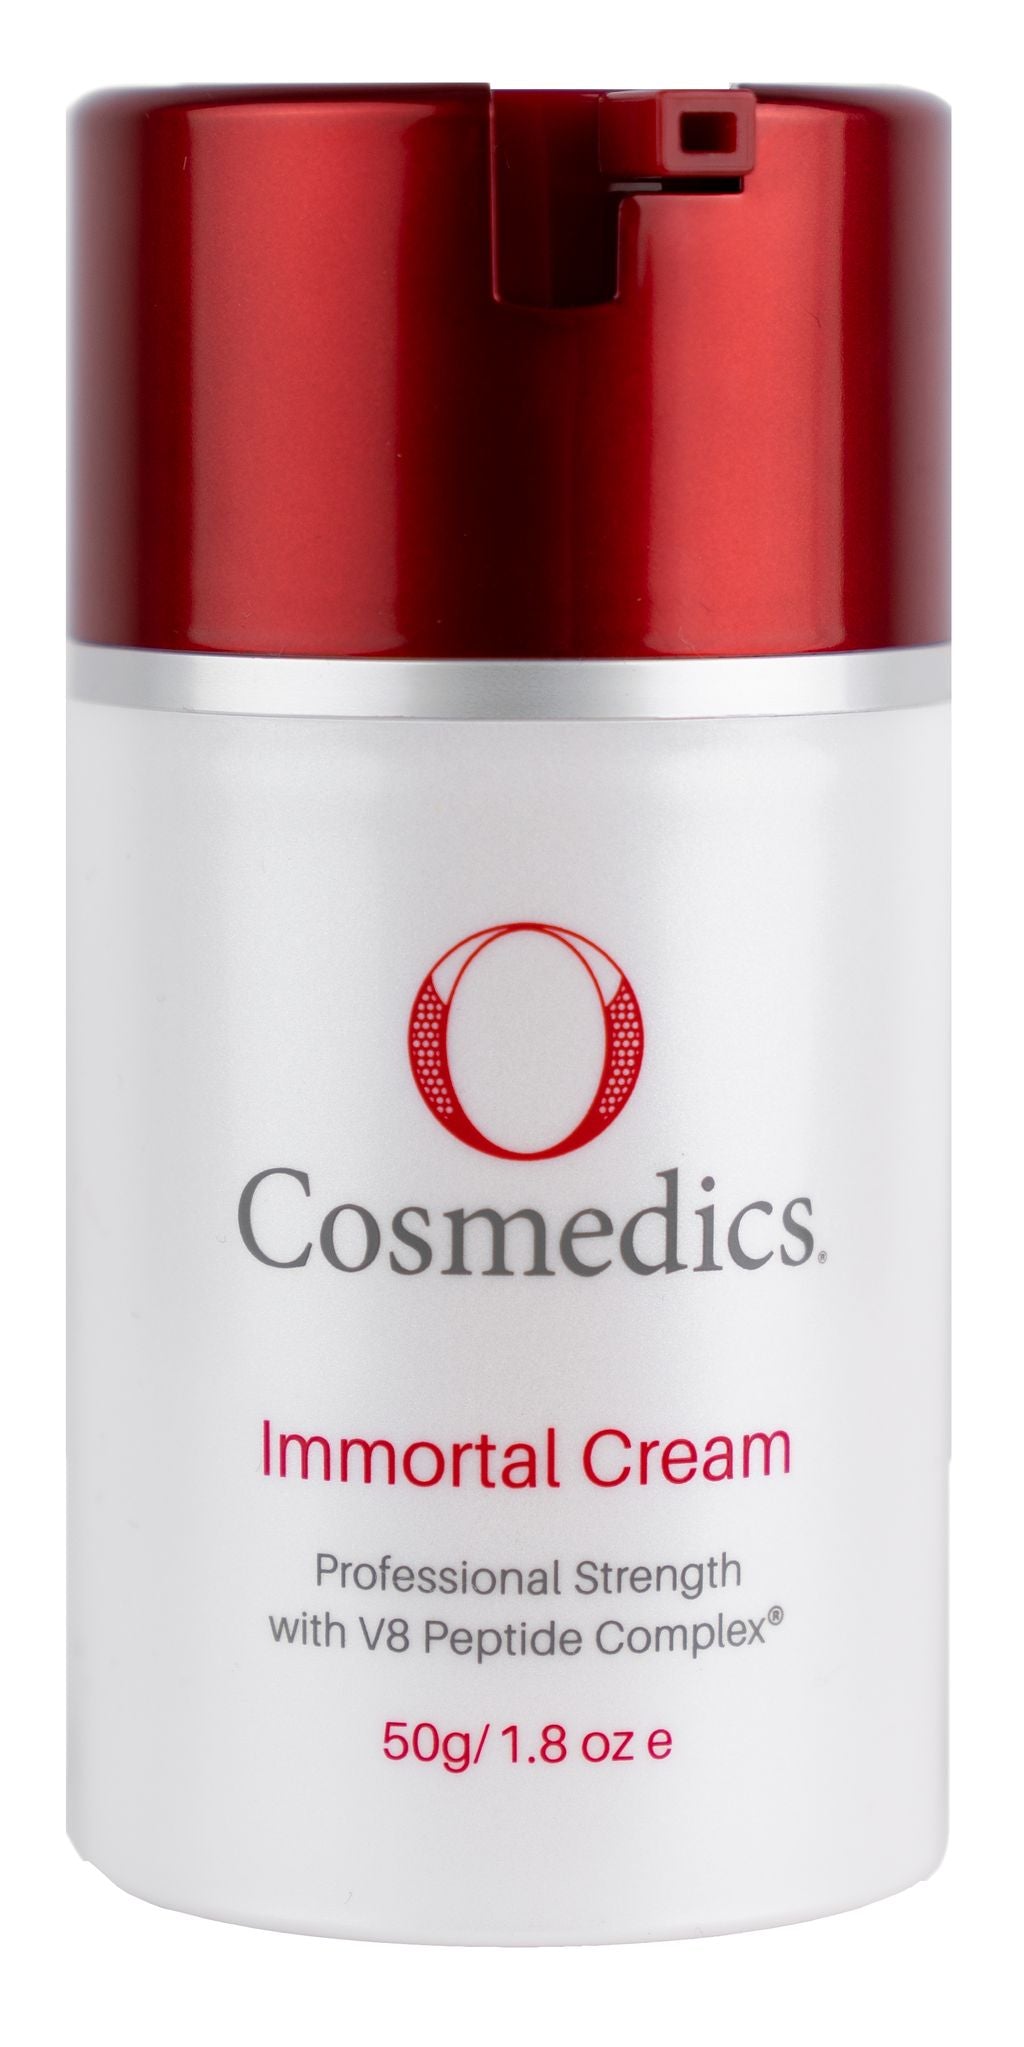 O Cosmedics Immortal Cream 50g